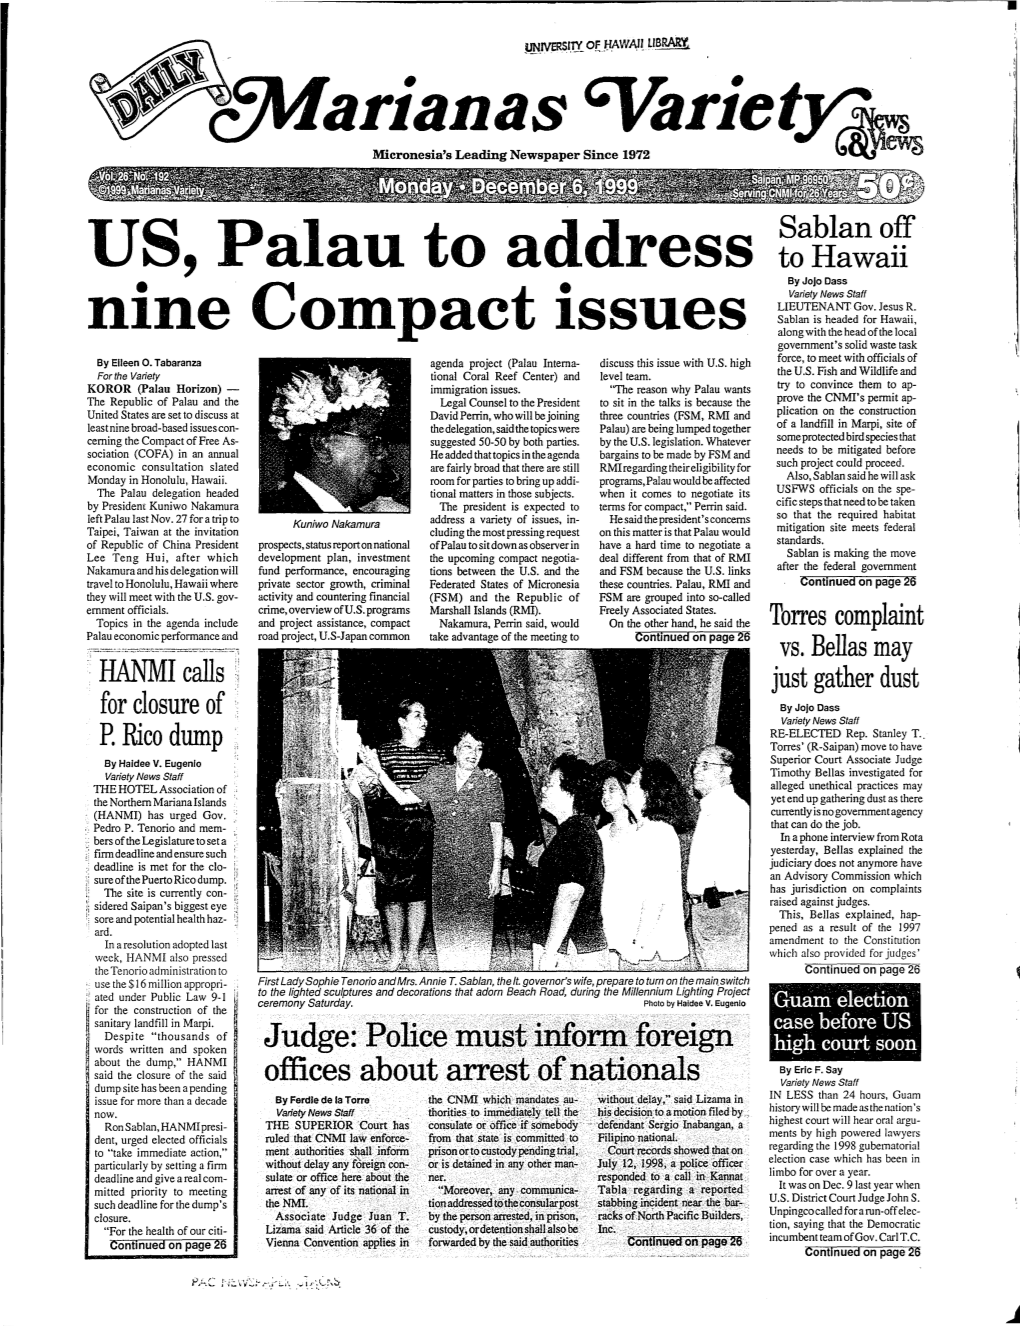 Palau to Address to Hawaii by Jojo Dass Variety News Staff LIEUTENANT Gov